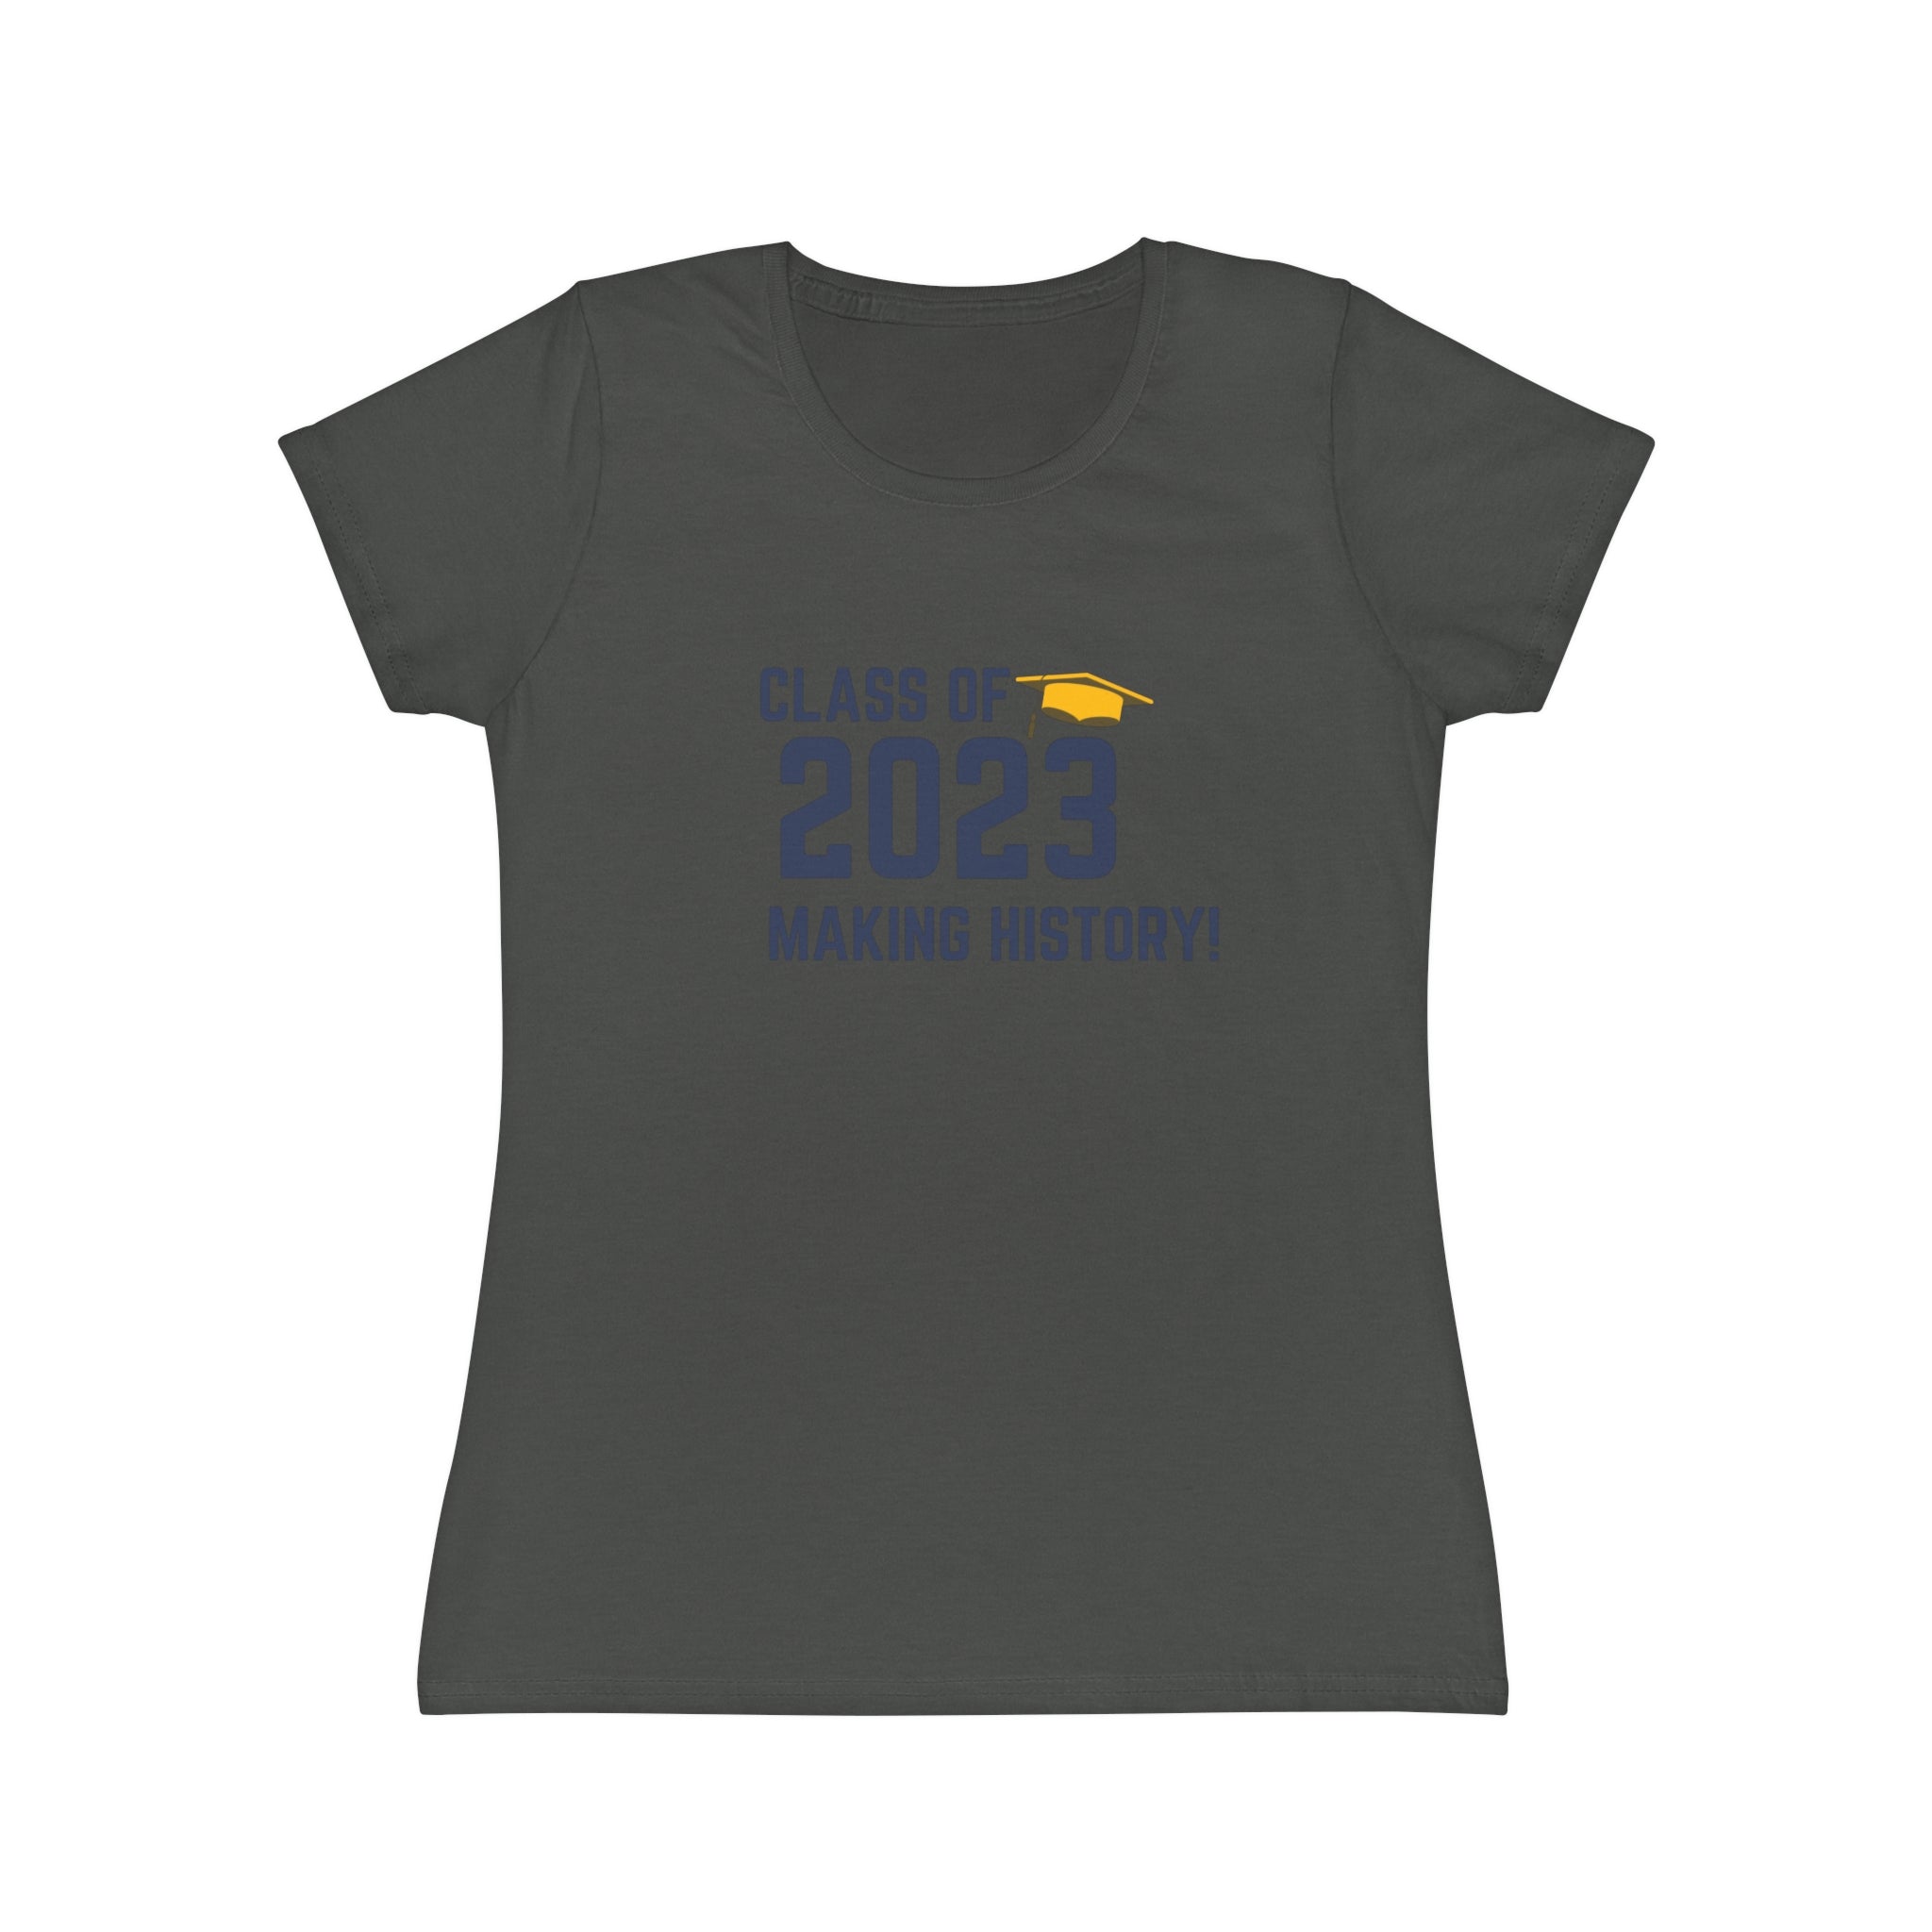 Printify T-Shirt Light Graphite / XS Class of 2023 Making History! - Women's Iconic T-Shirt